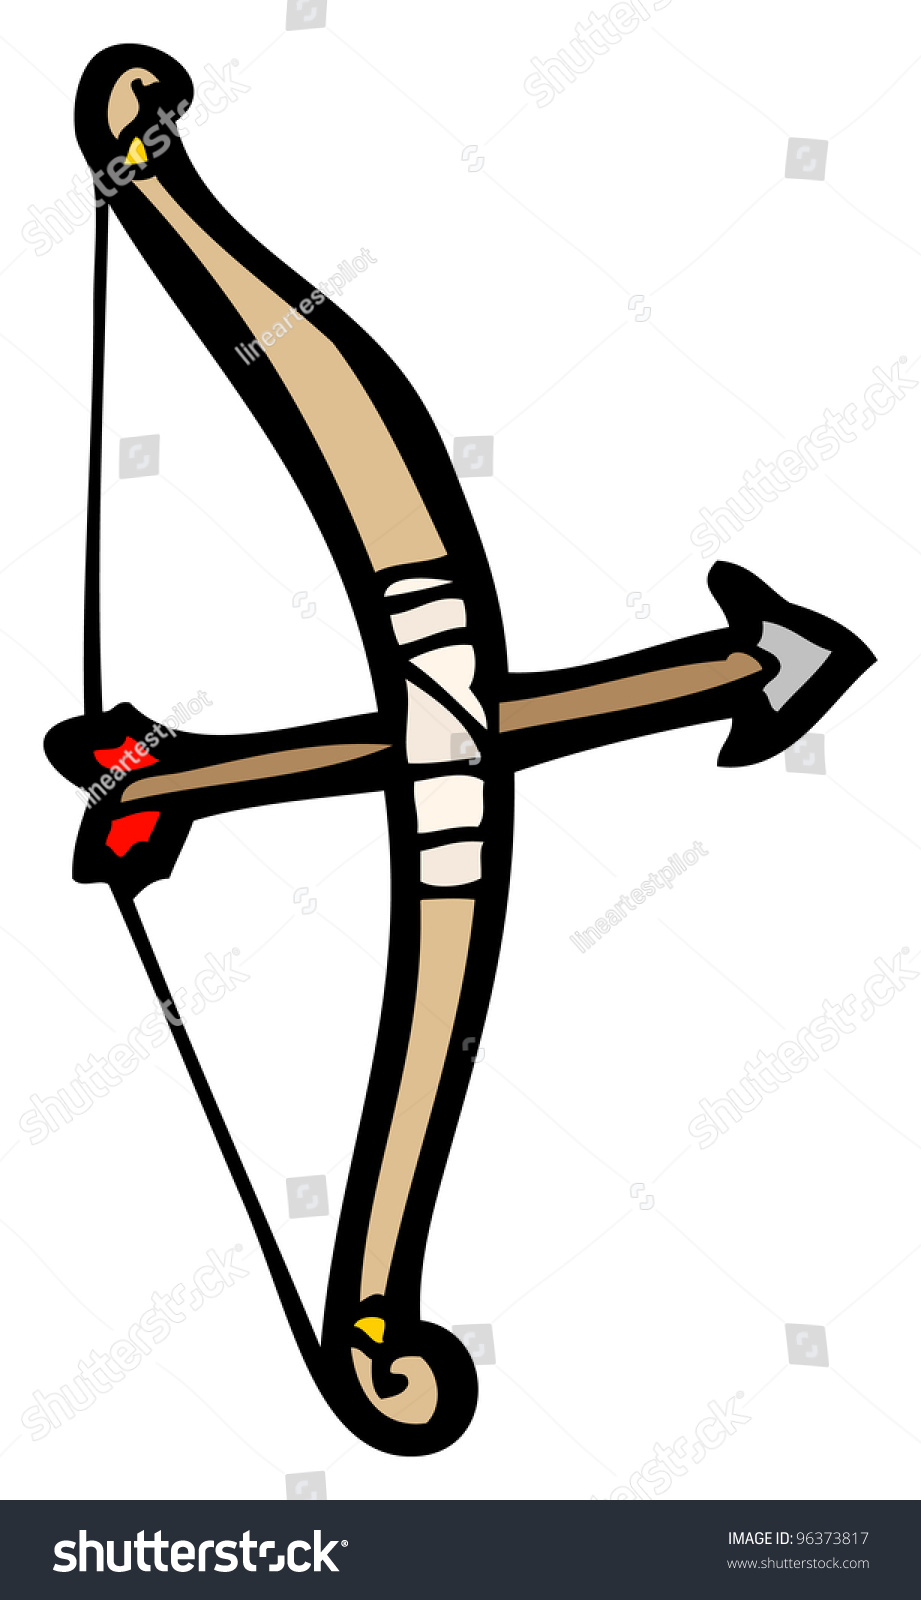 Bow And Arrow Cartoon Stock Photo 96373817 : Shutterstock